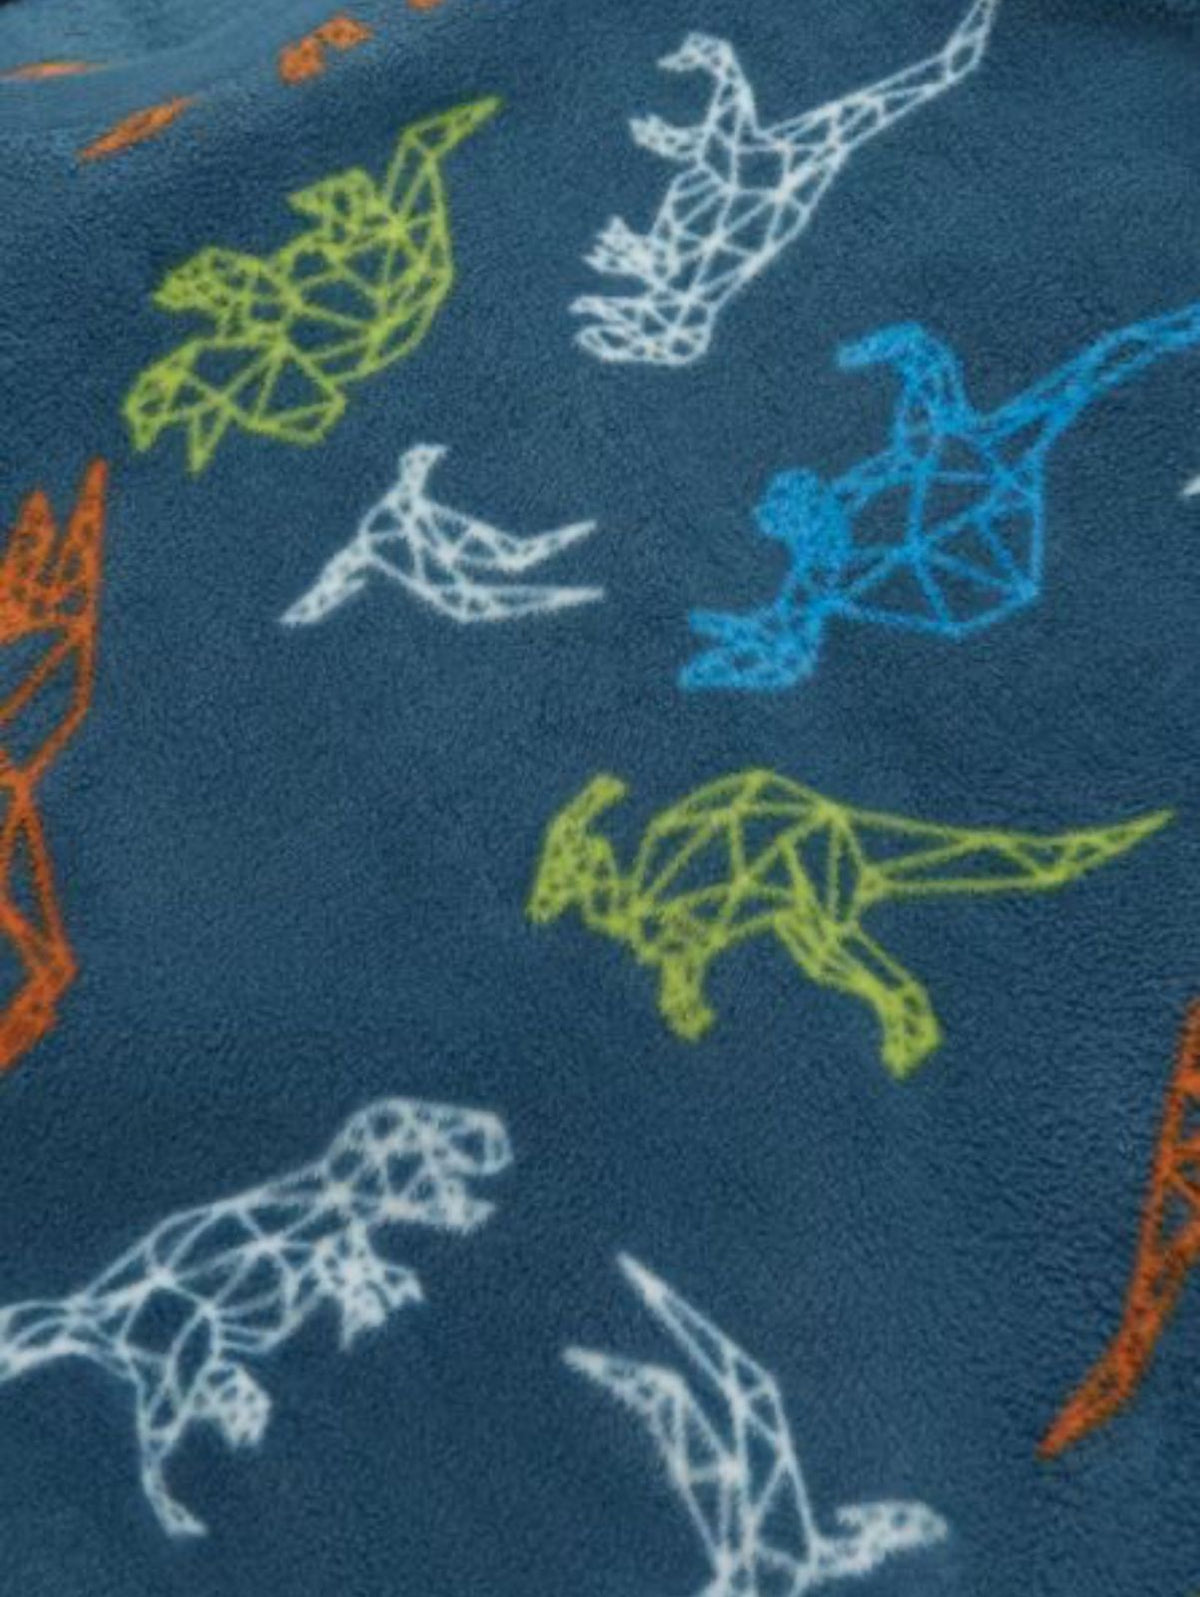 Soft fleece fabric with dinosaurs prints